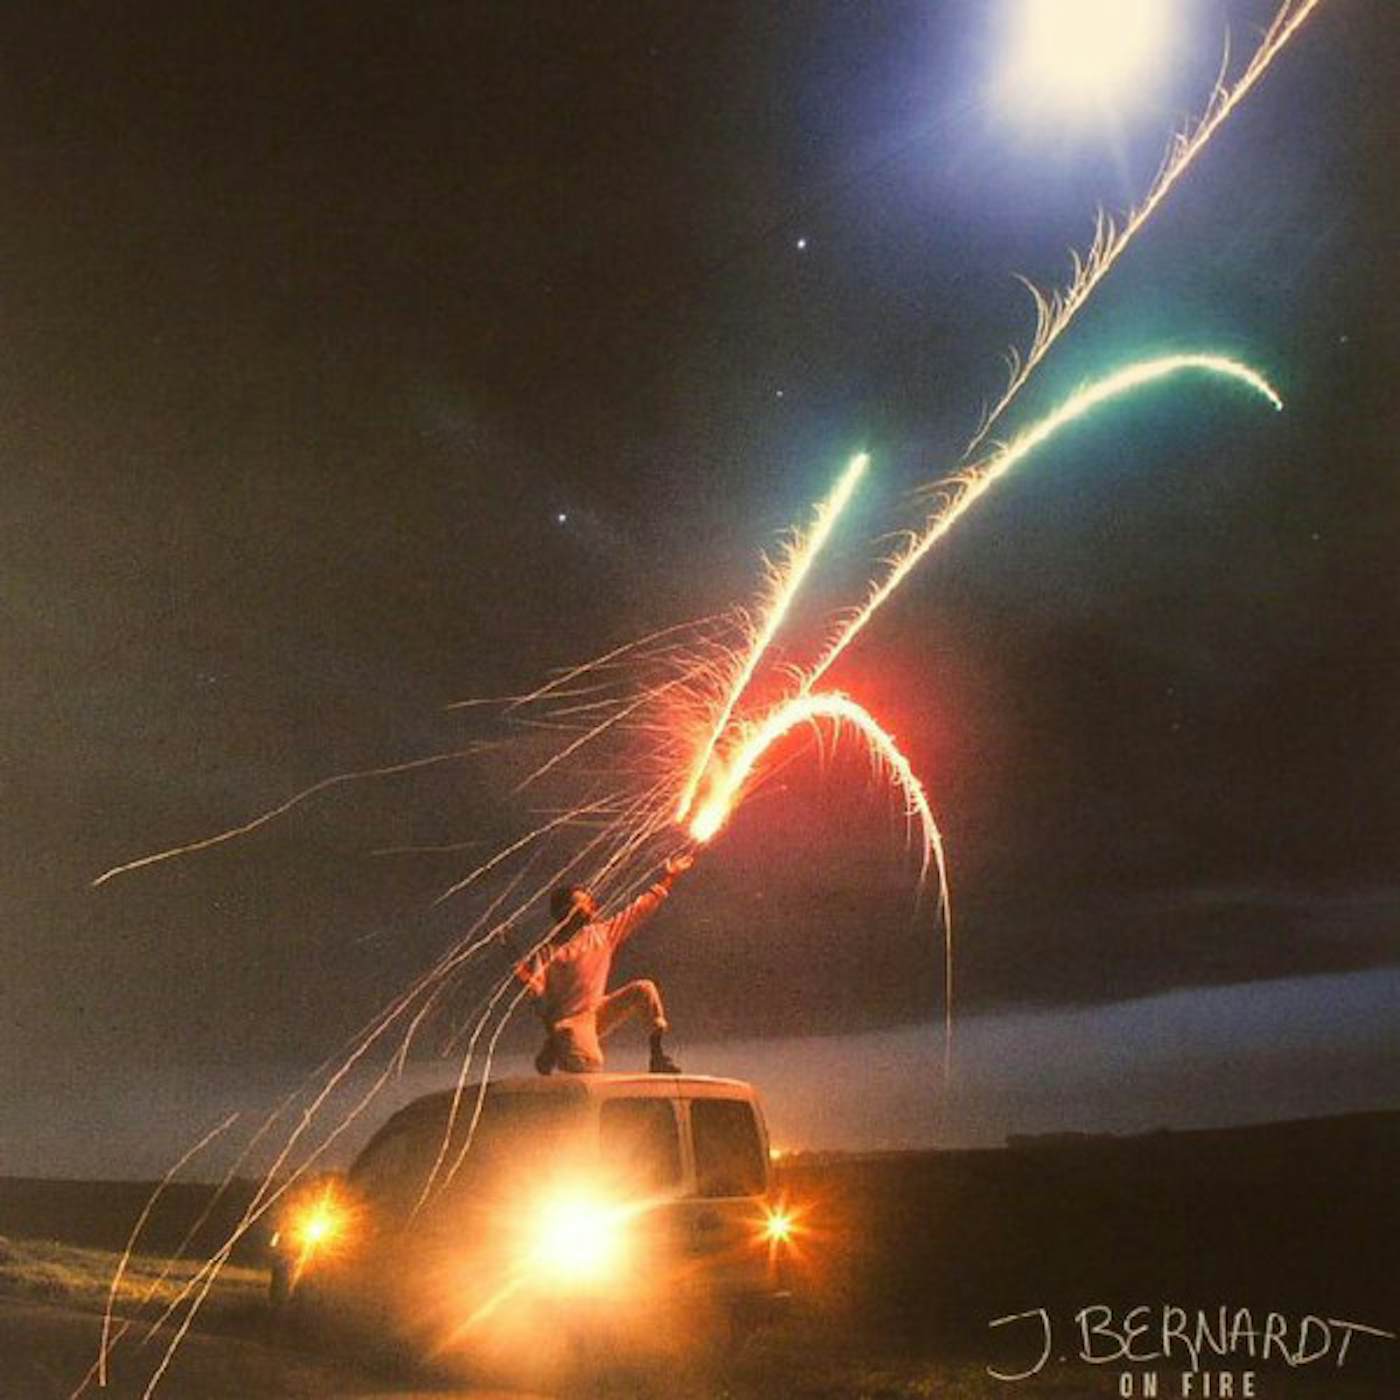 J. Bernardt Wicked Streets / On Fire Vinyl Record